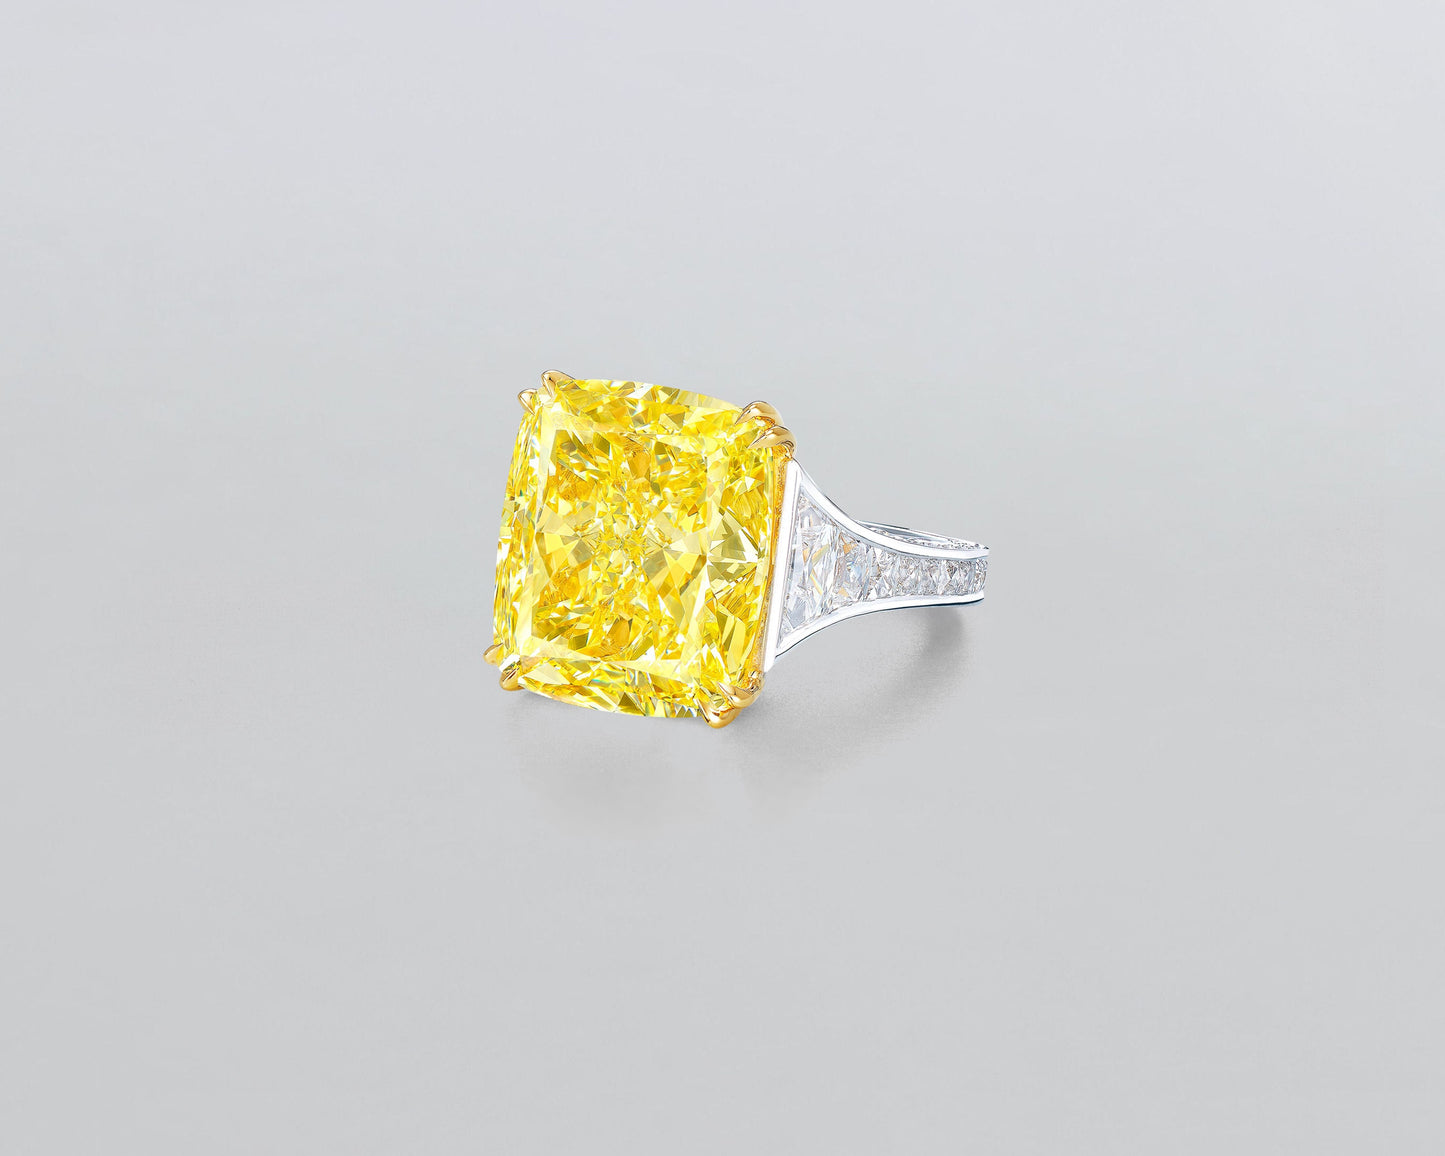 14.96 carat Cushion Cut Fancy Vivid Yellow Diamond Ring